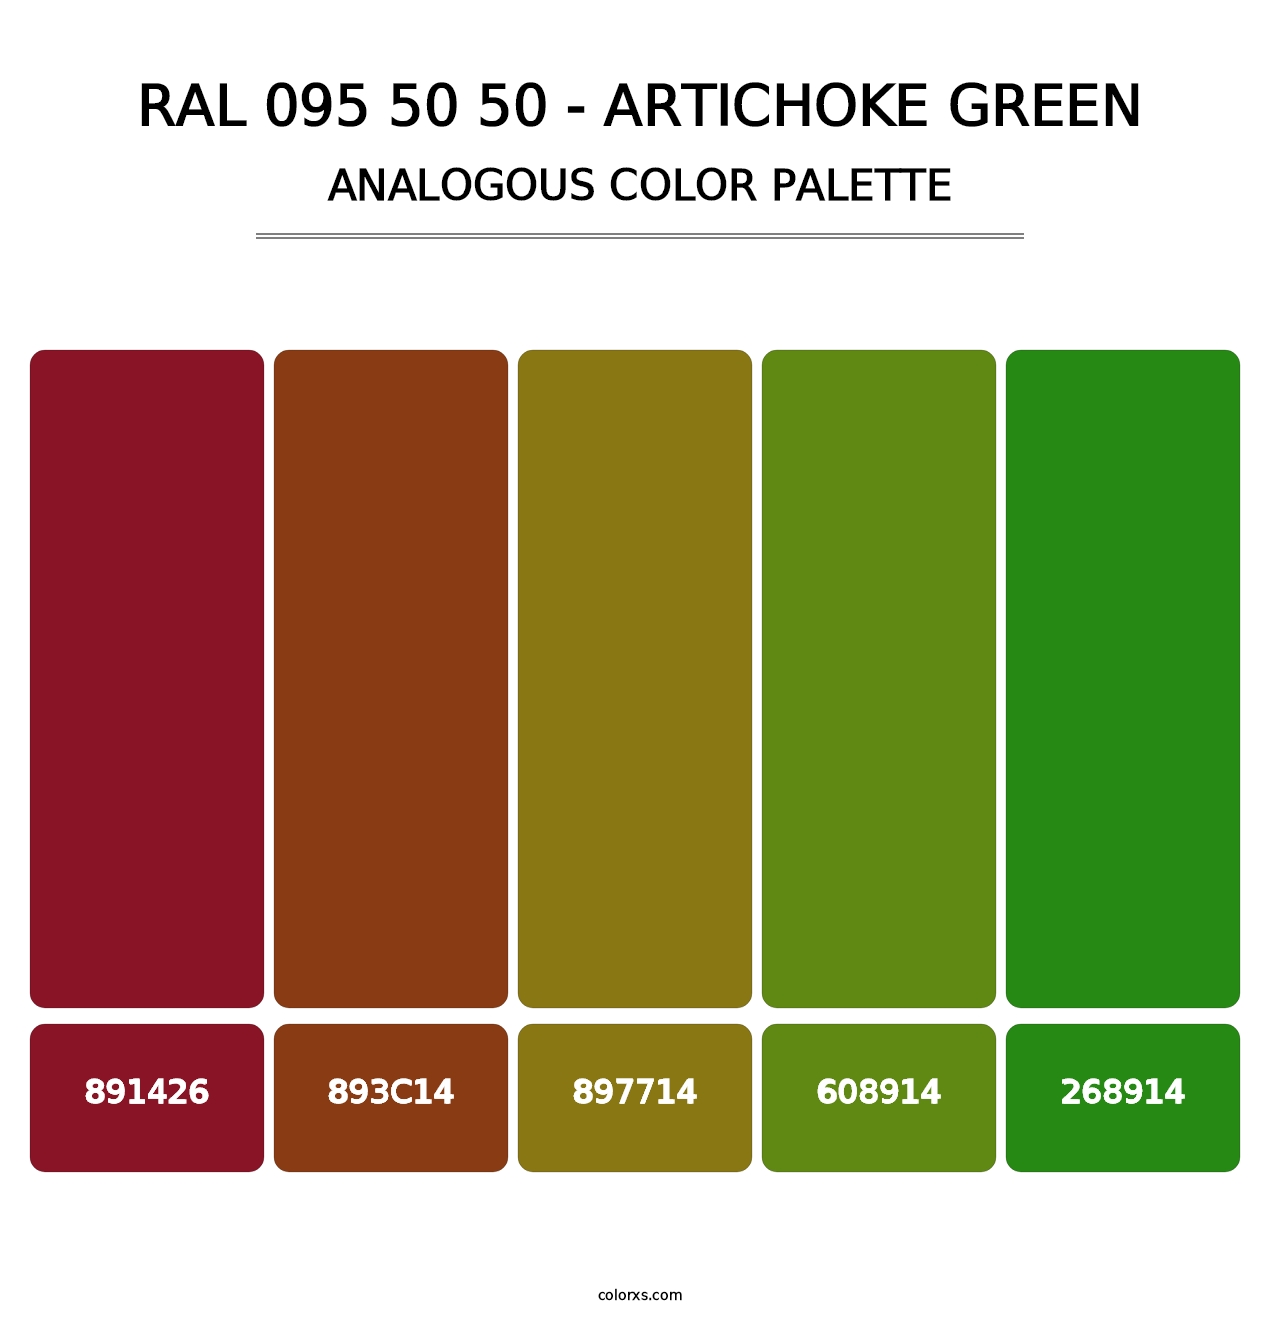 RAL 095 50 50 - Artichoke Green - Analogous Color Palette